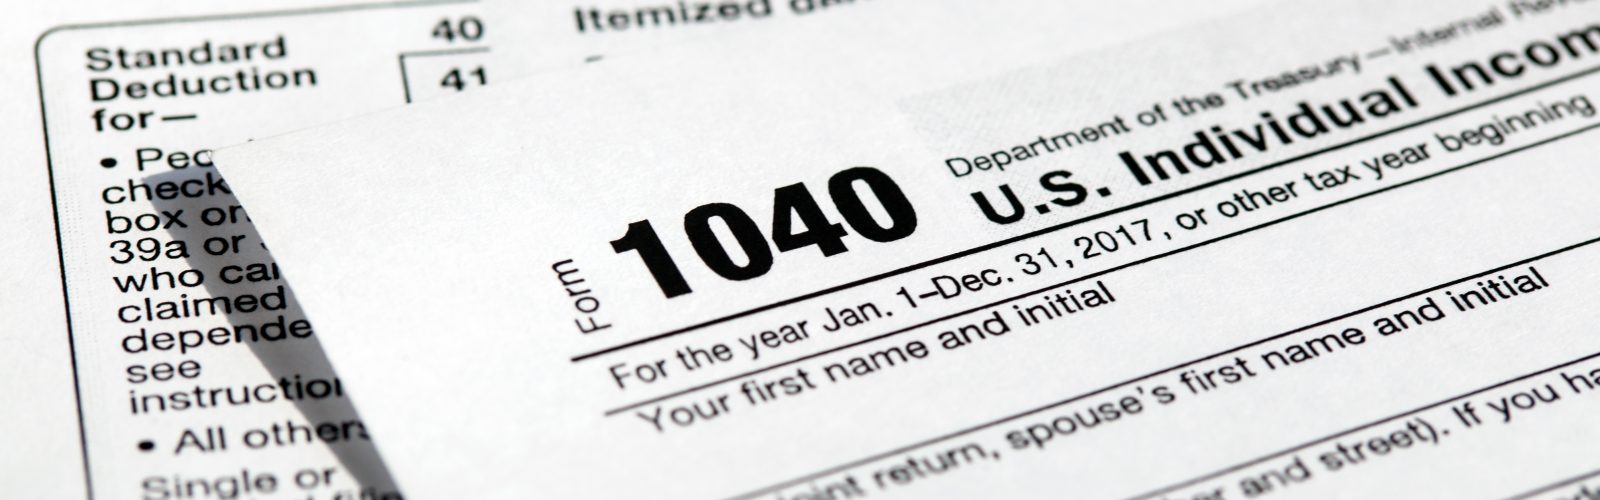 USA tax form 1040 for US individual tax return. Close-up